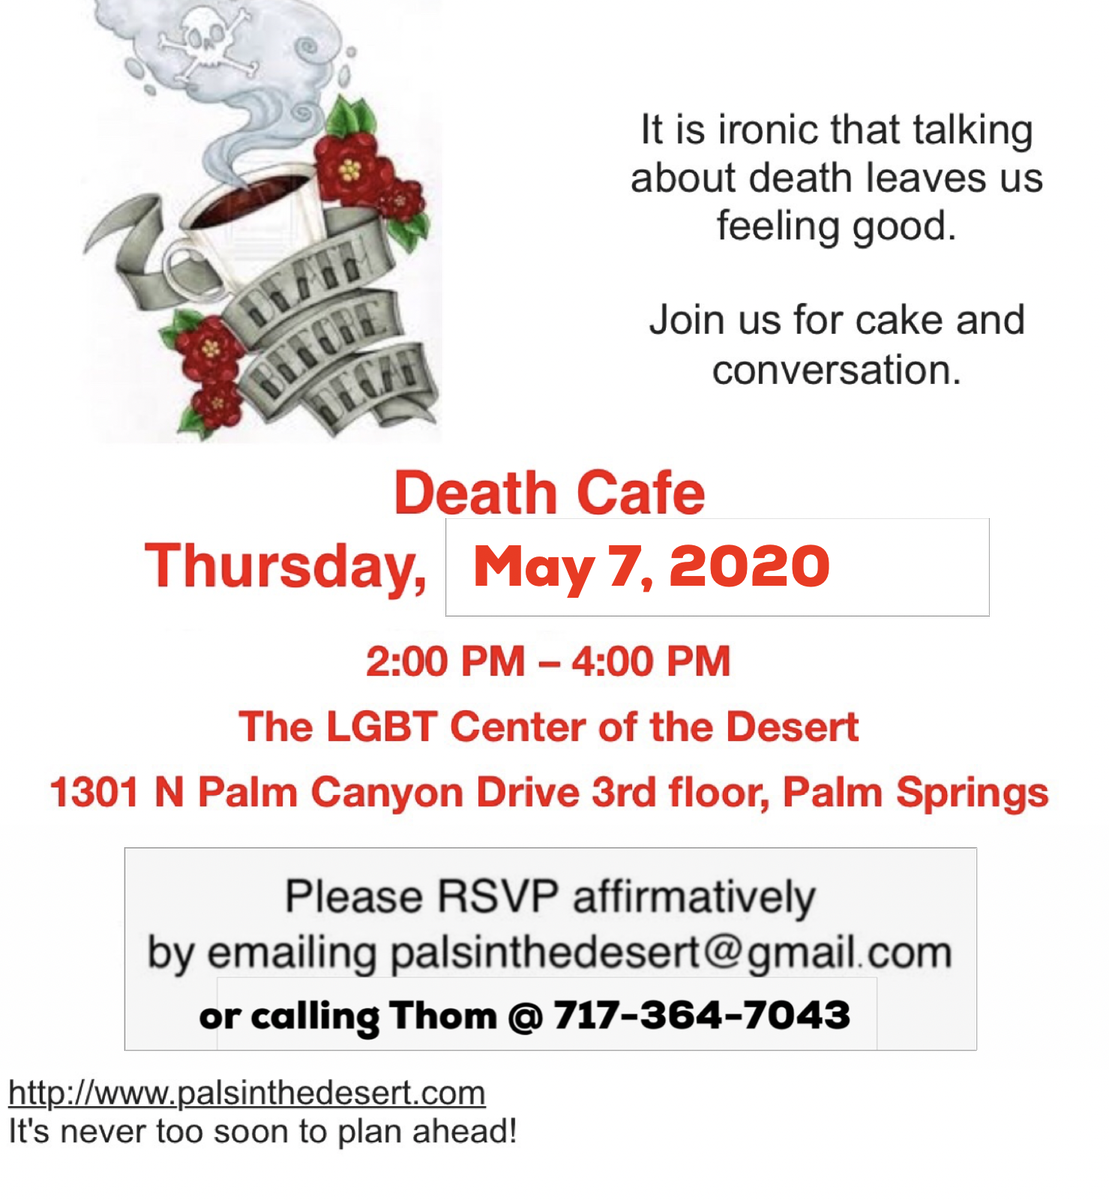 Death Cafe Palm Springs: CANCELED